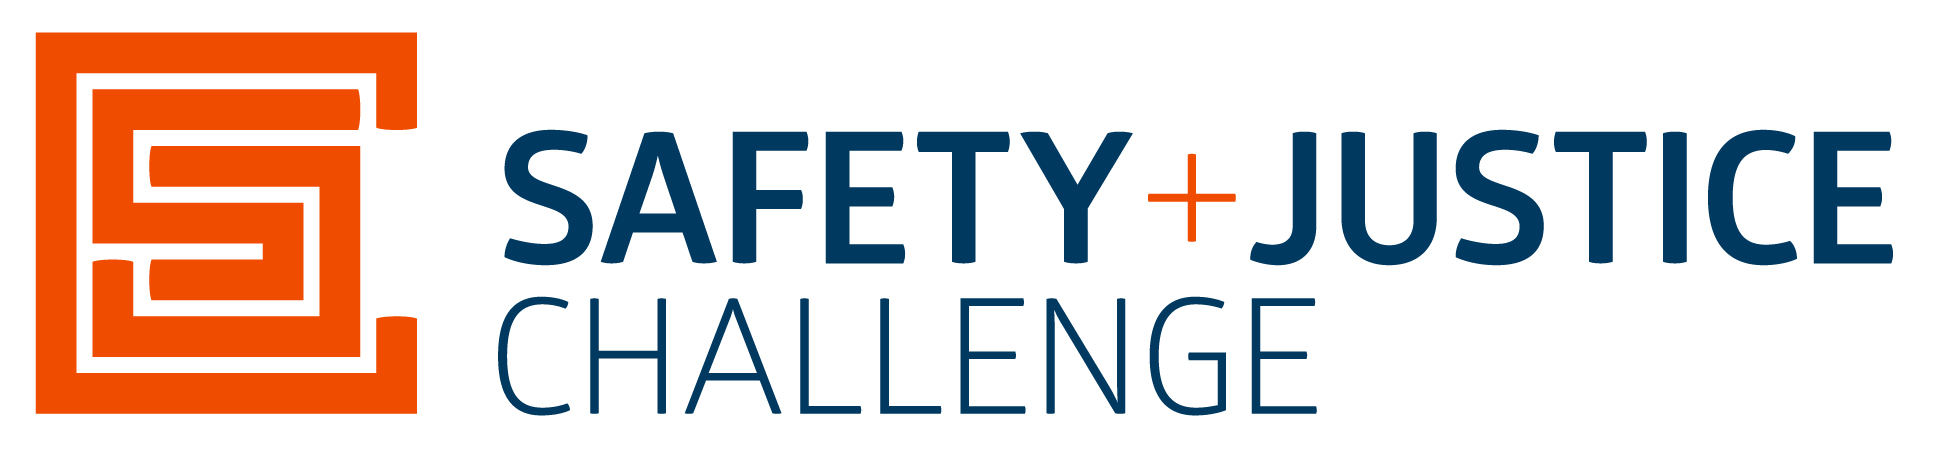 Safety + Justice Challenge logo